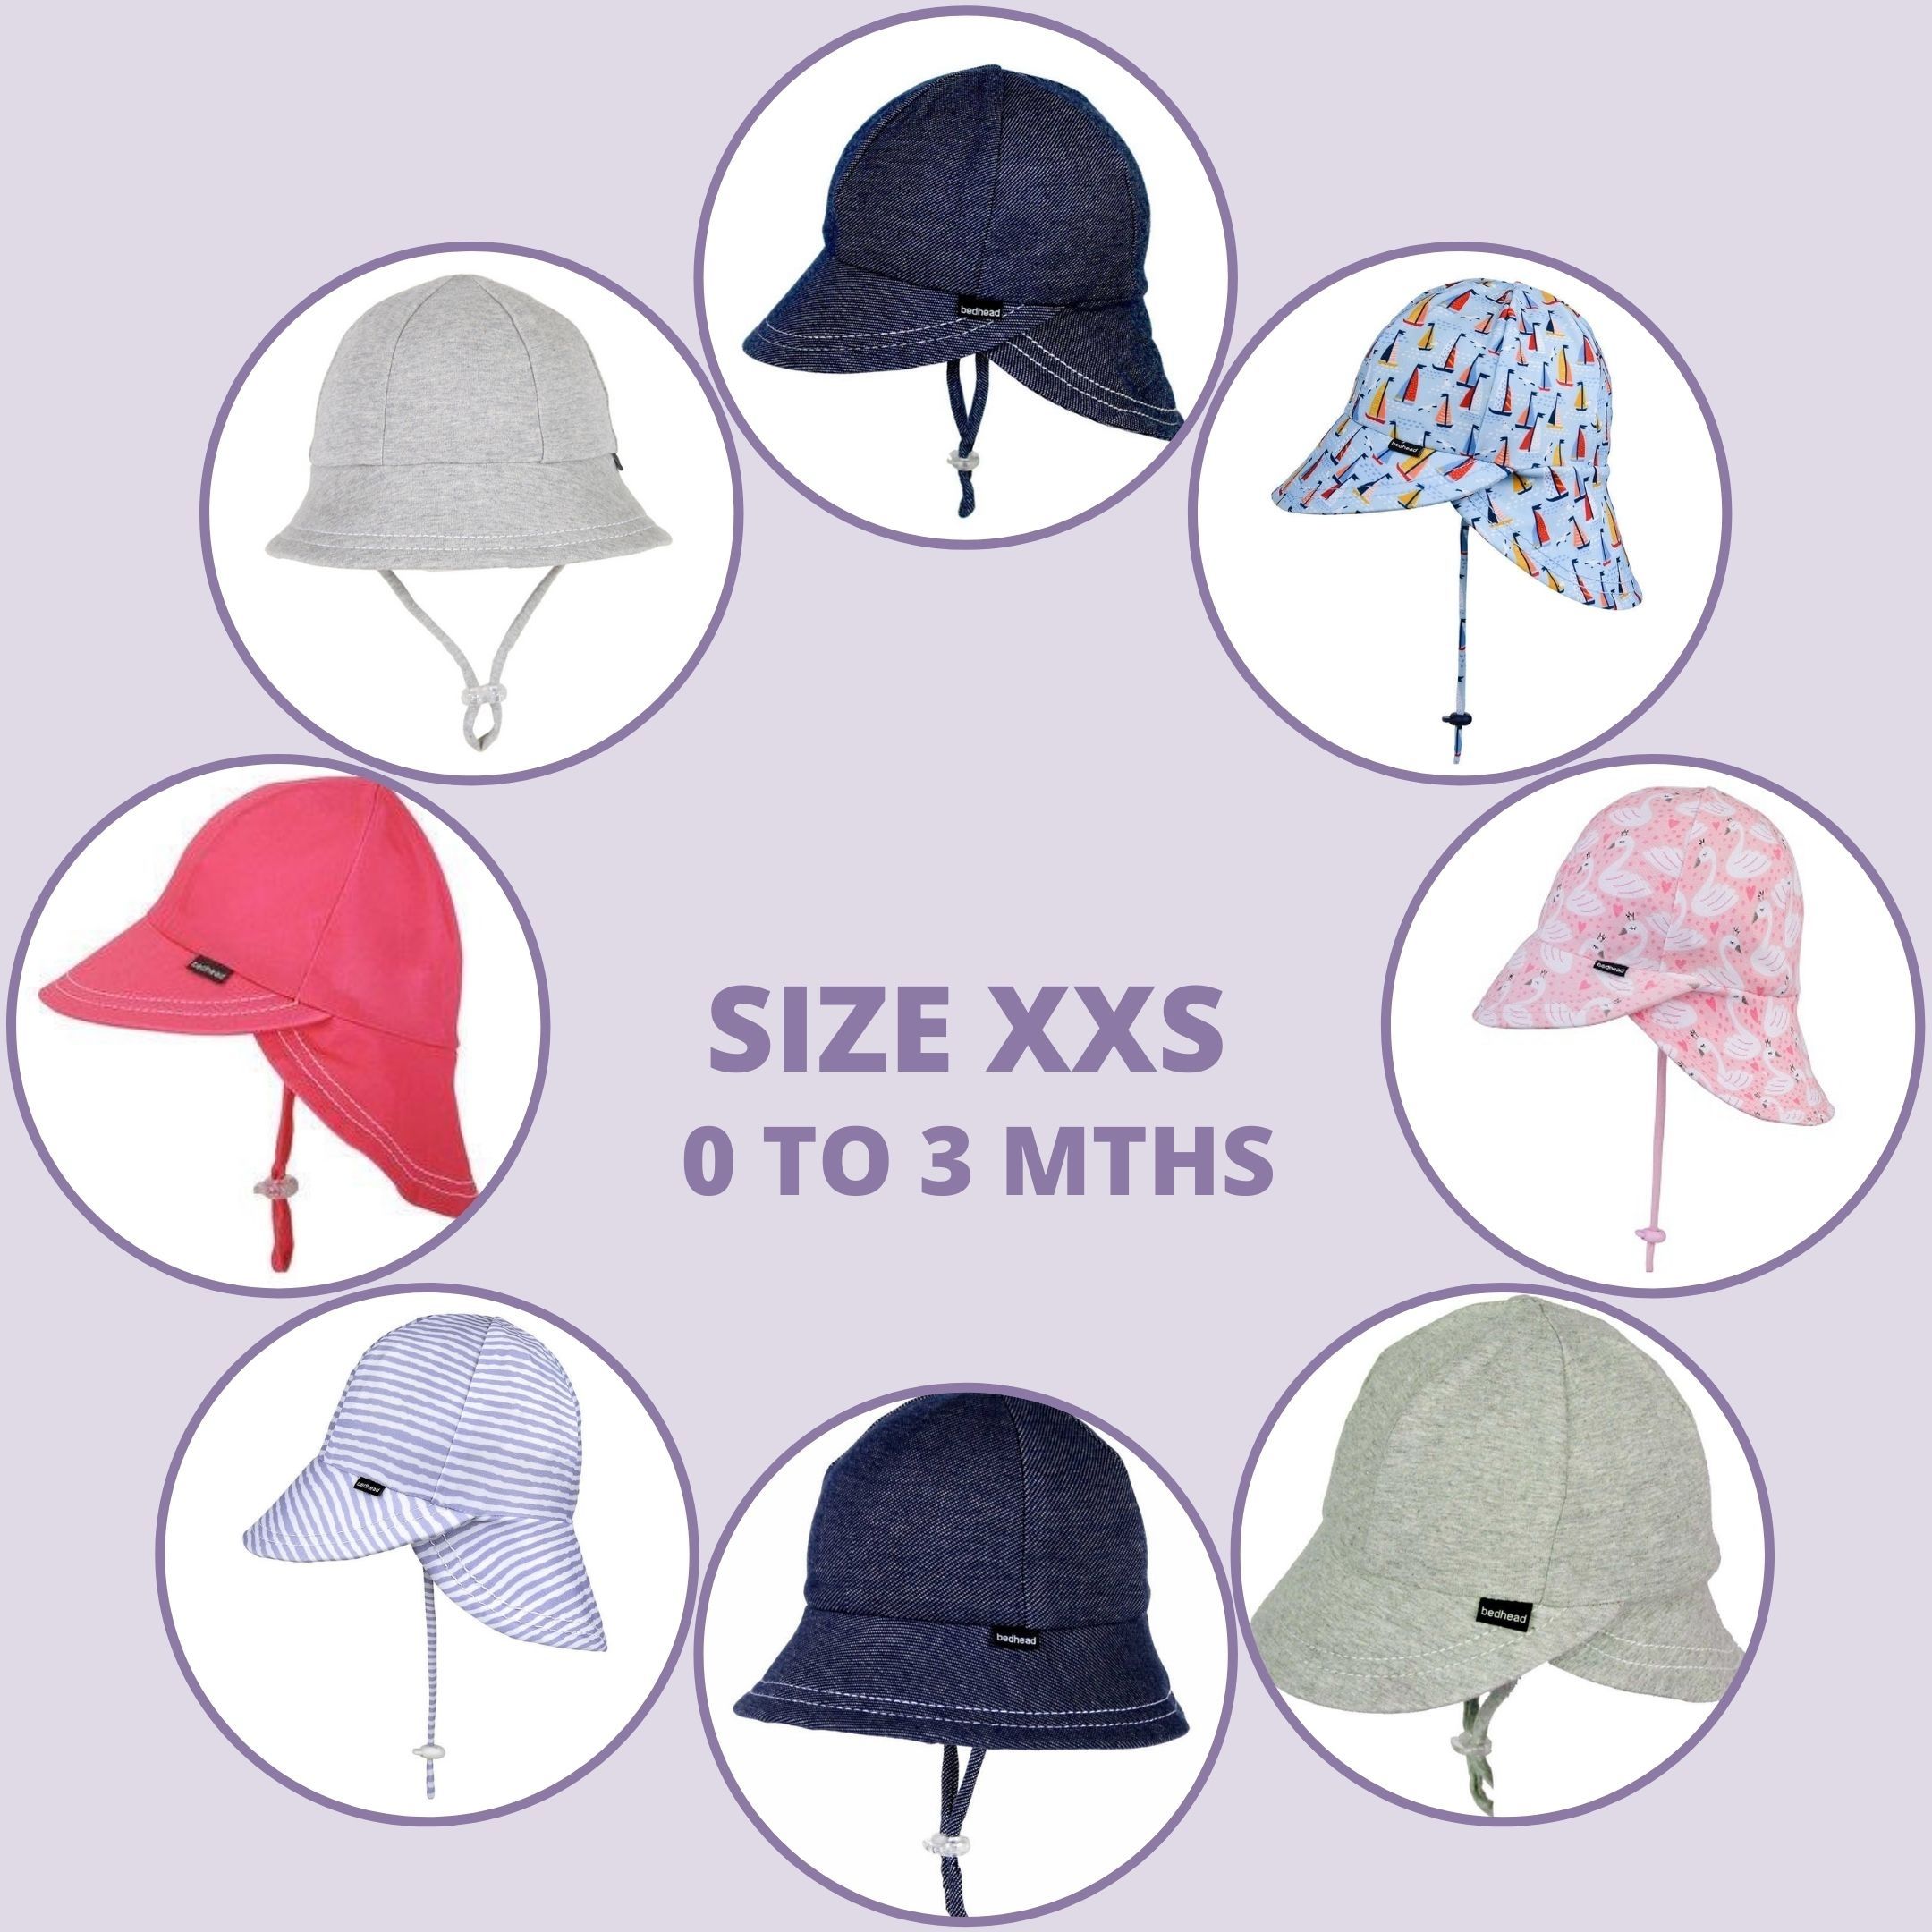 Bedhead - Hats - Size - XXS - 37cm - 0 - 3 Months